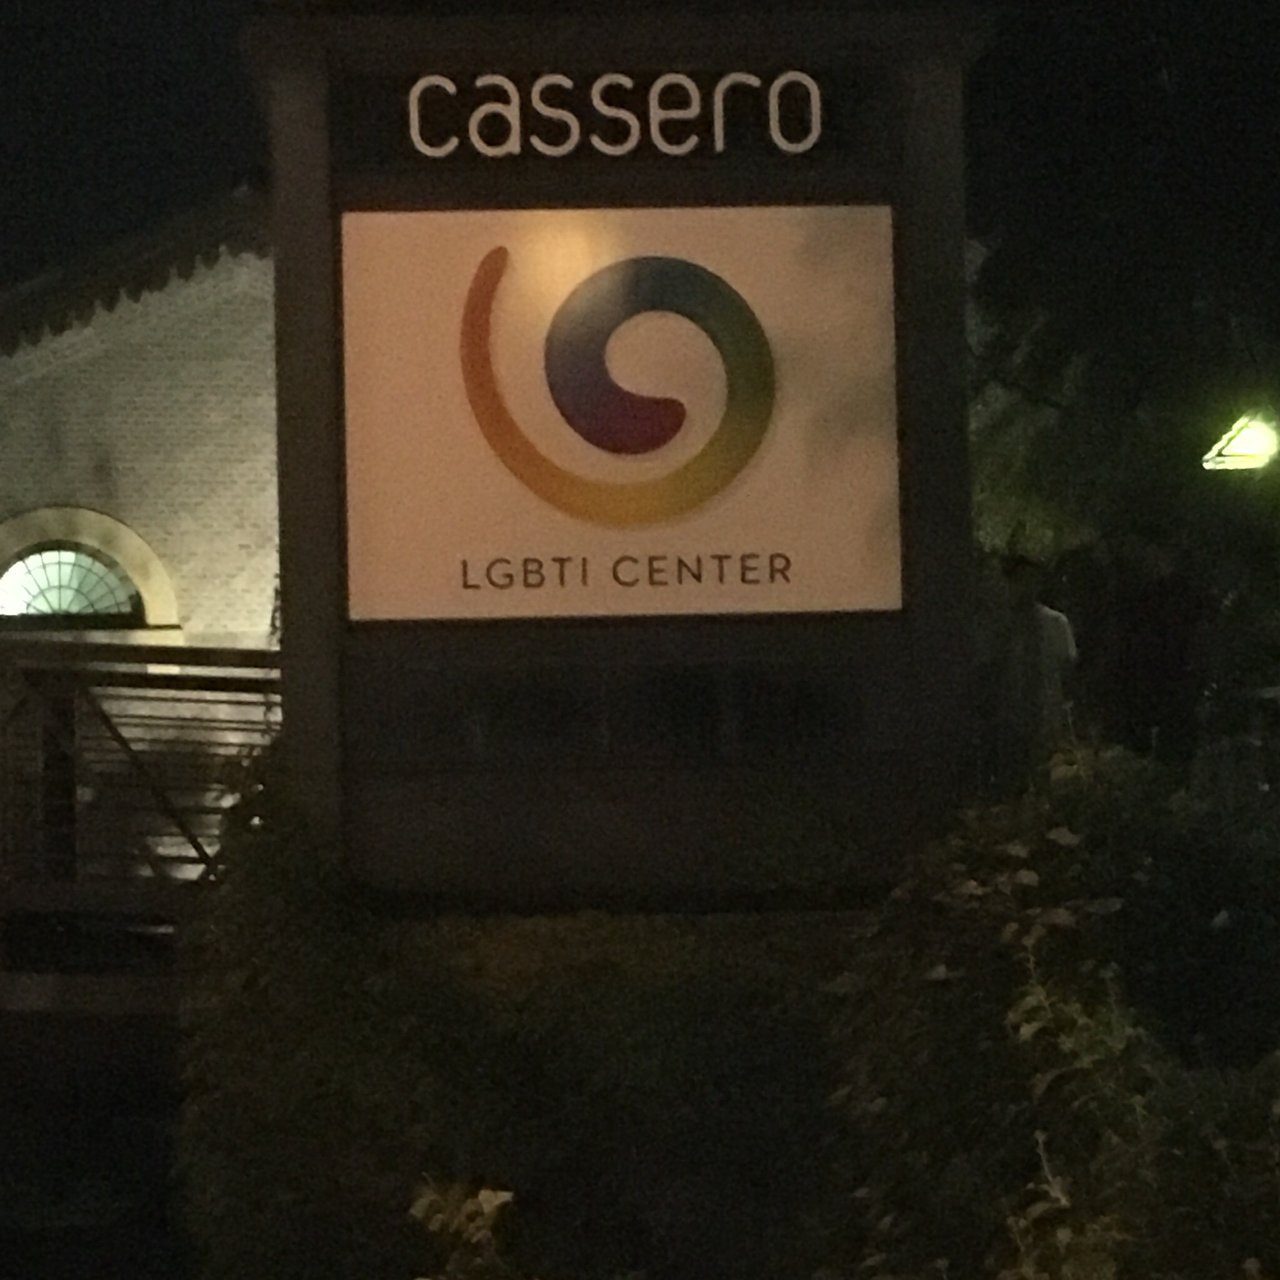 Cassero LGBT Center